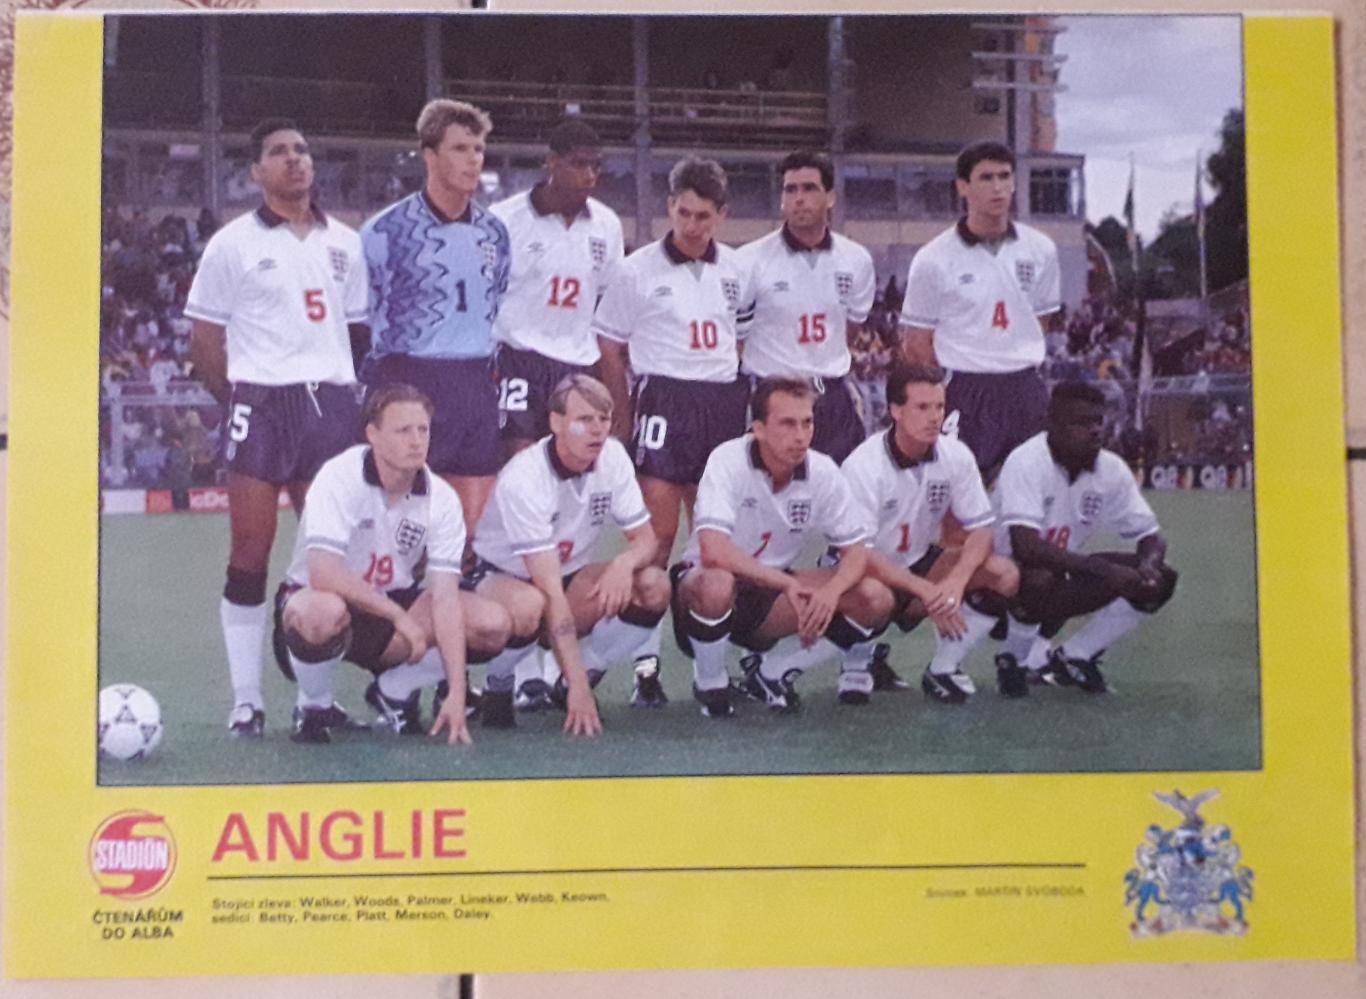 Anglie EURO 1992. Плакат формата А4 из журнала Stadion.